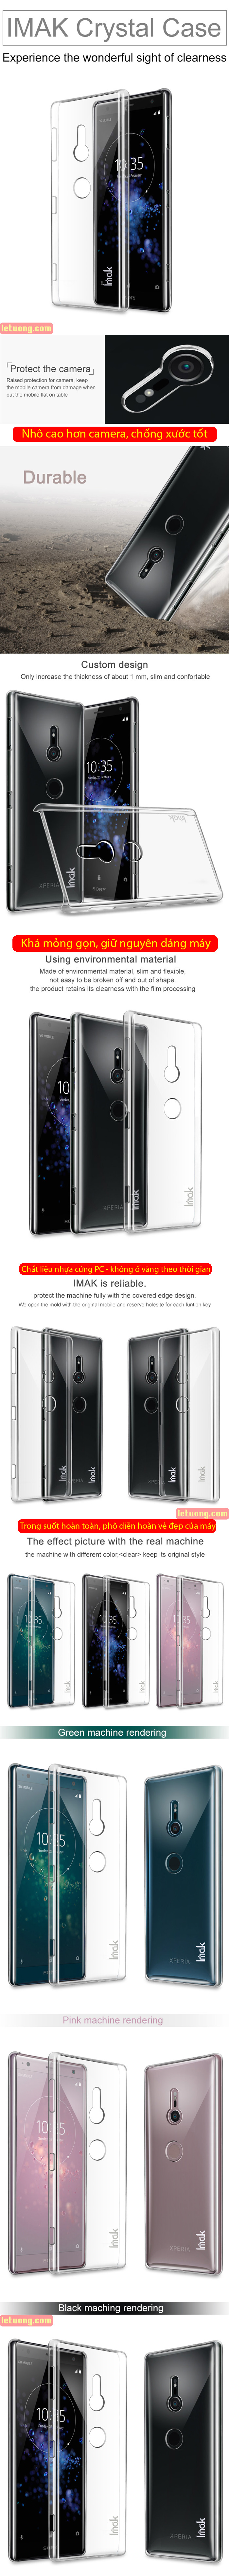 Ốp lưng Sony XZ2, Bao da Sony Xperia XZ2 hàng hiệu - cao cấp Op-lung-sony-xperia-xz2-imak-nano-trong-suot-khong-o-vang-9